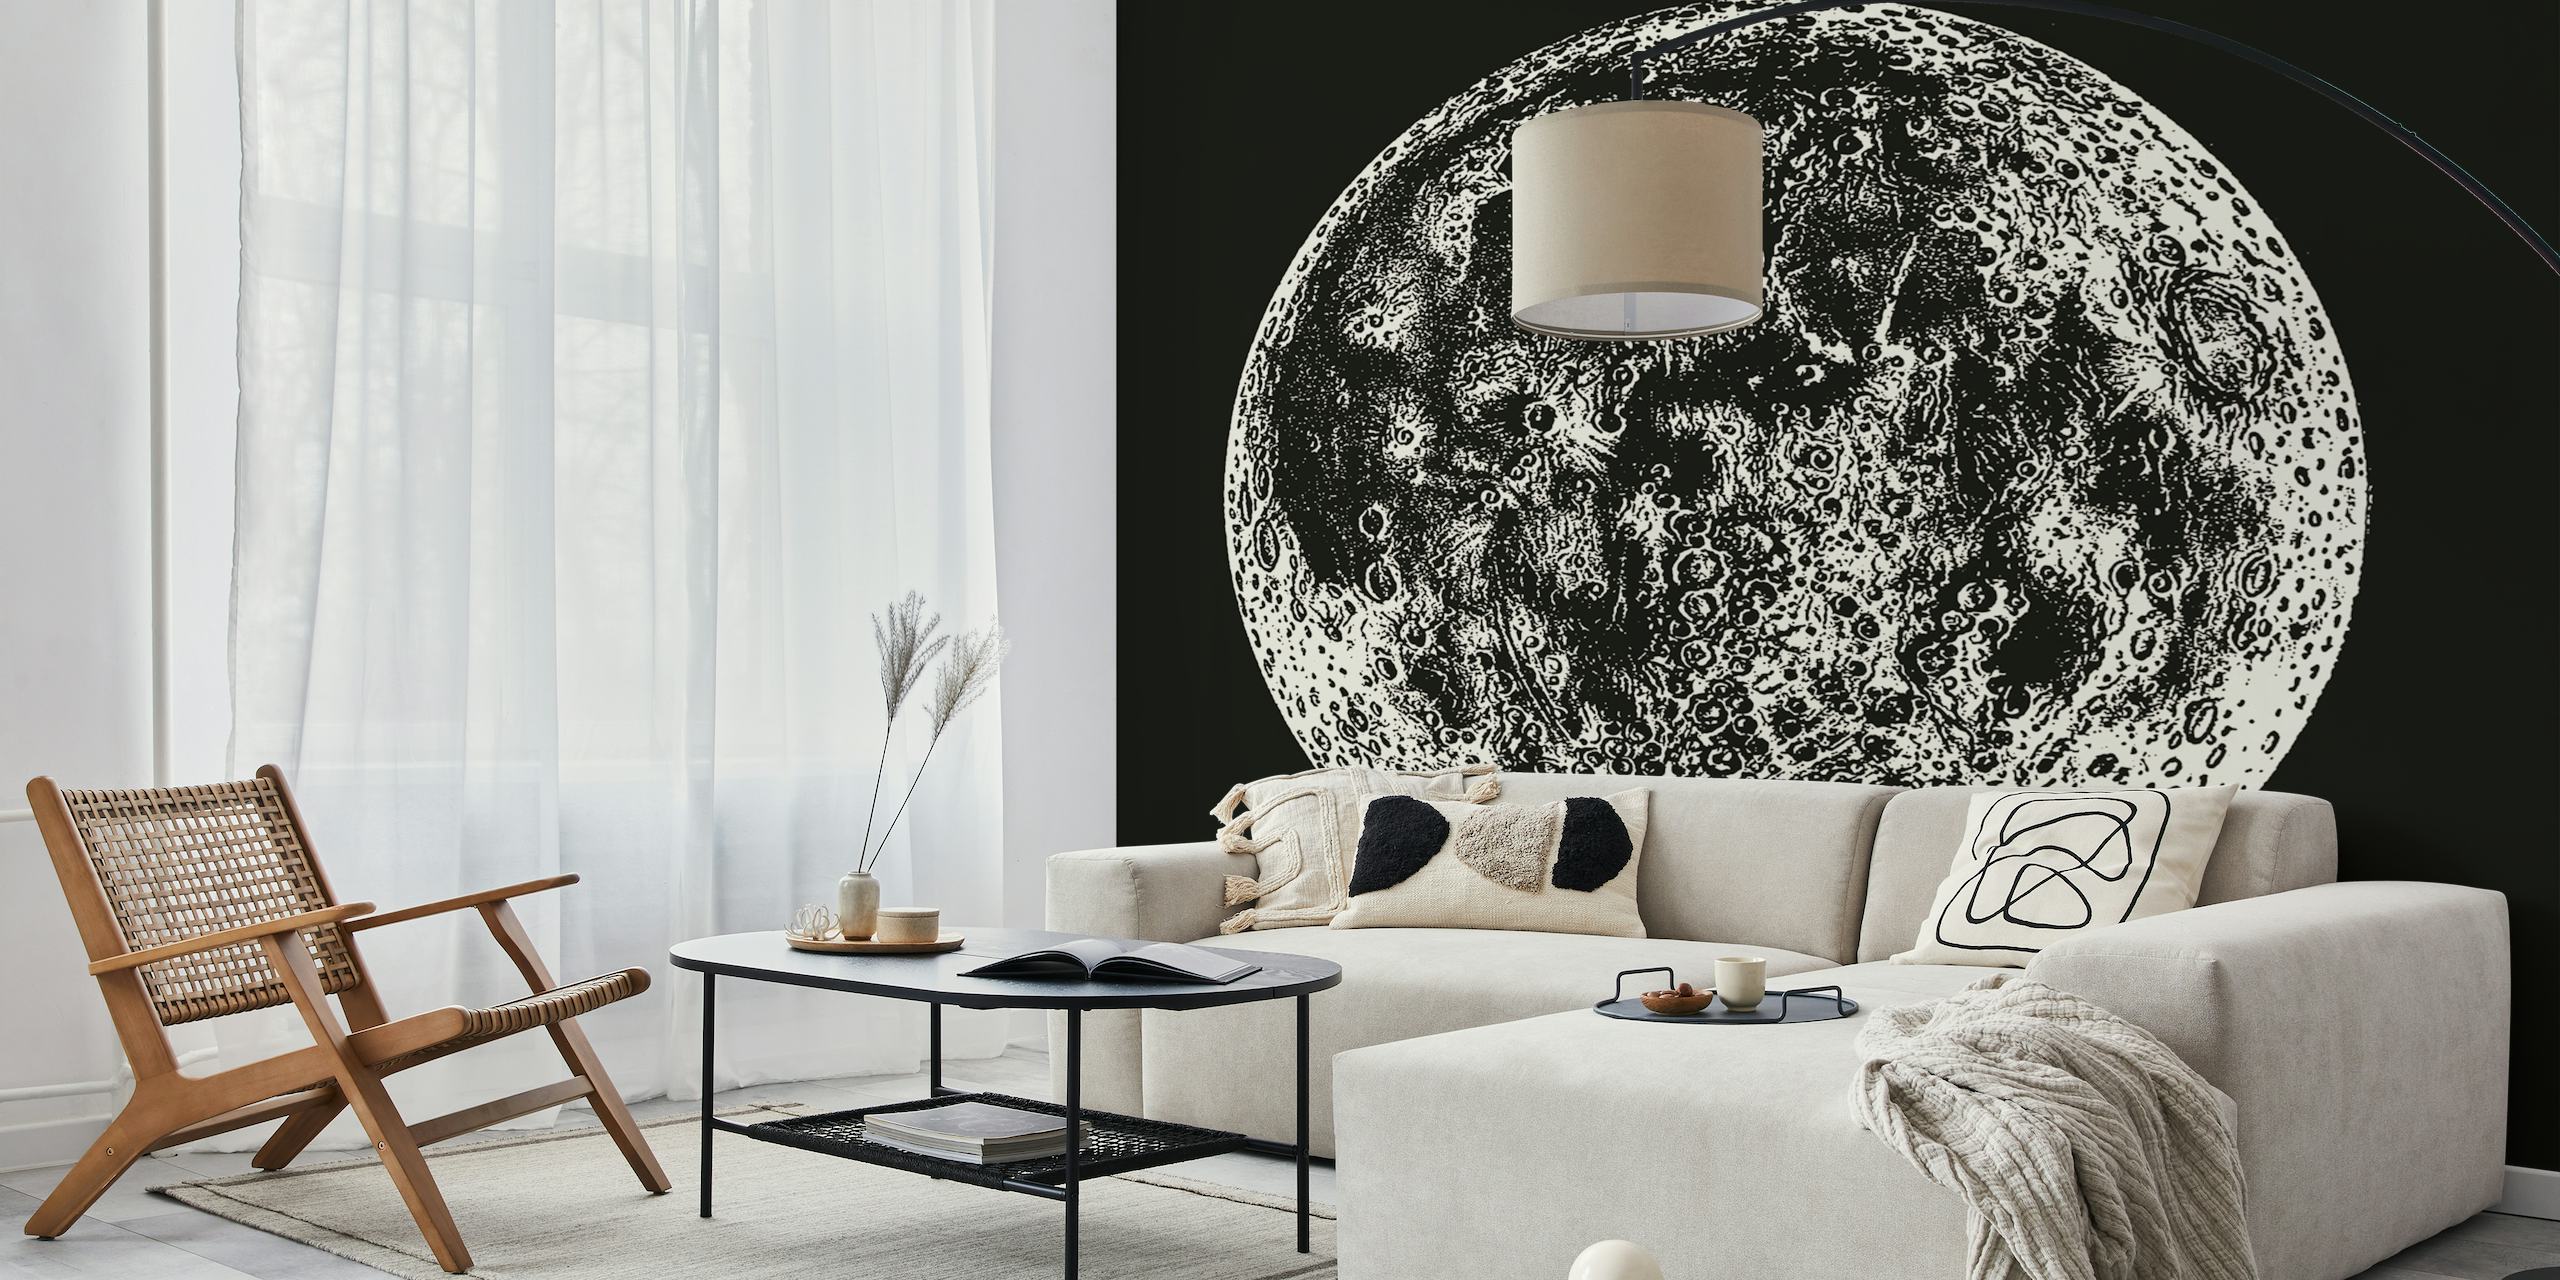 Full Moon - Vintage Astër ταπετσαρία